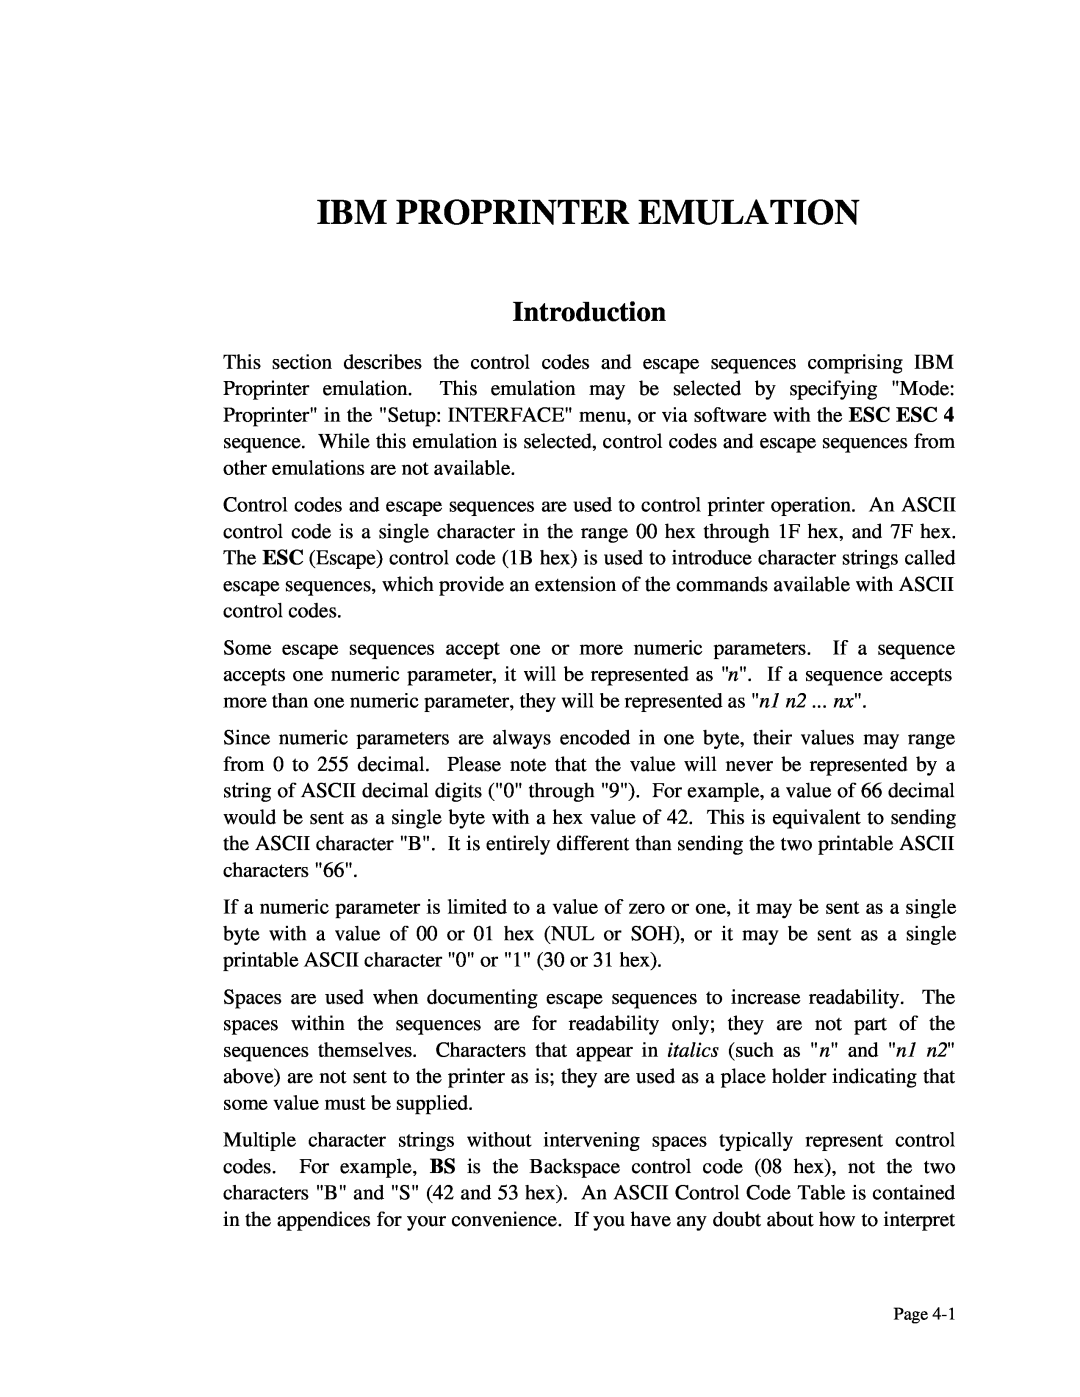 Printek 4300, 4503, 4500 manual Ibm Proprinter Emulation, Introduction 